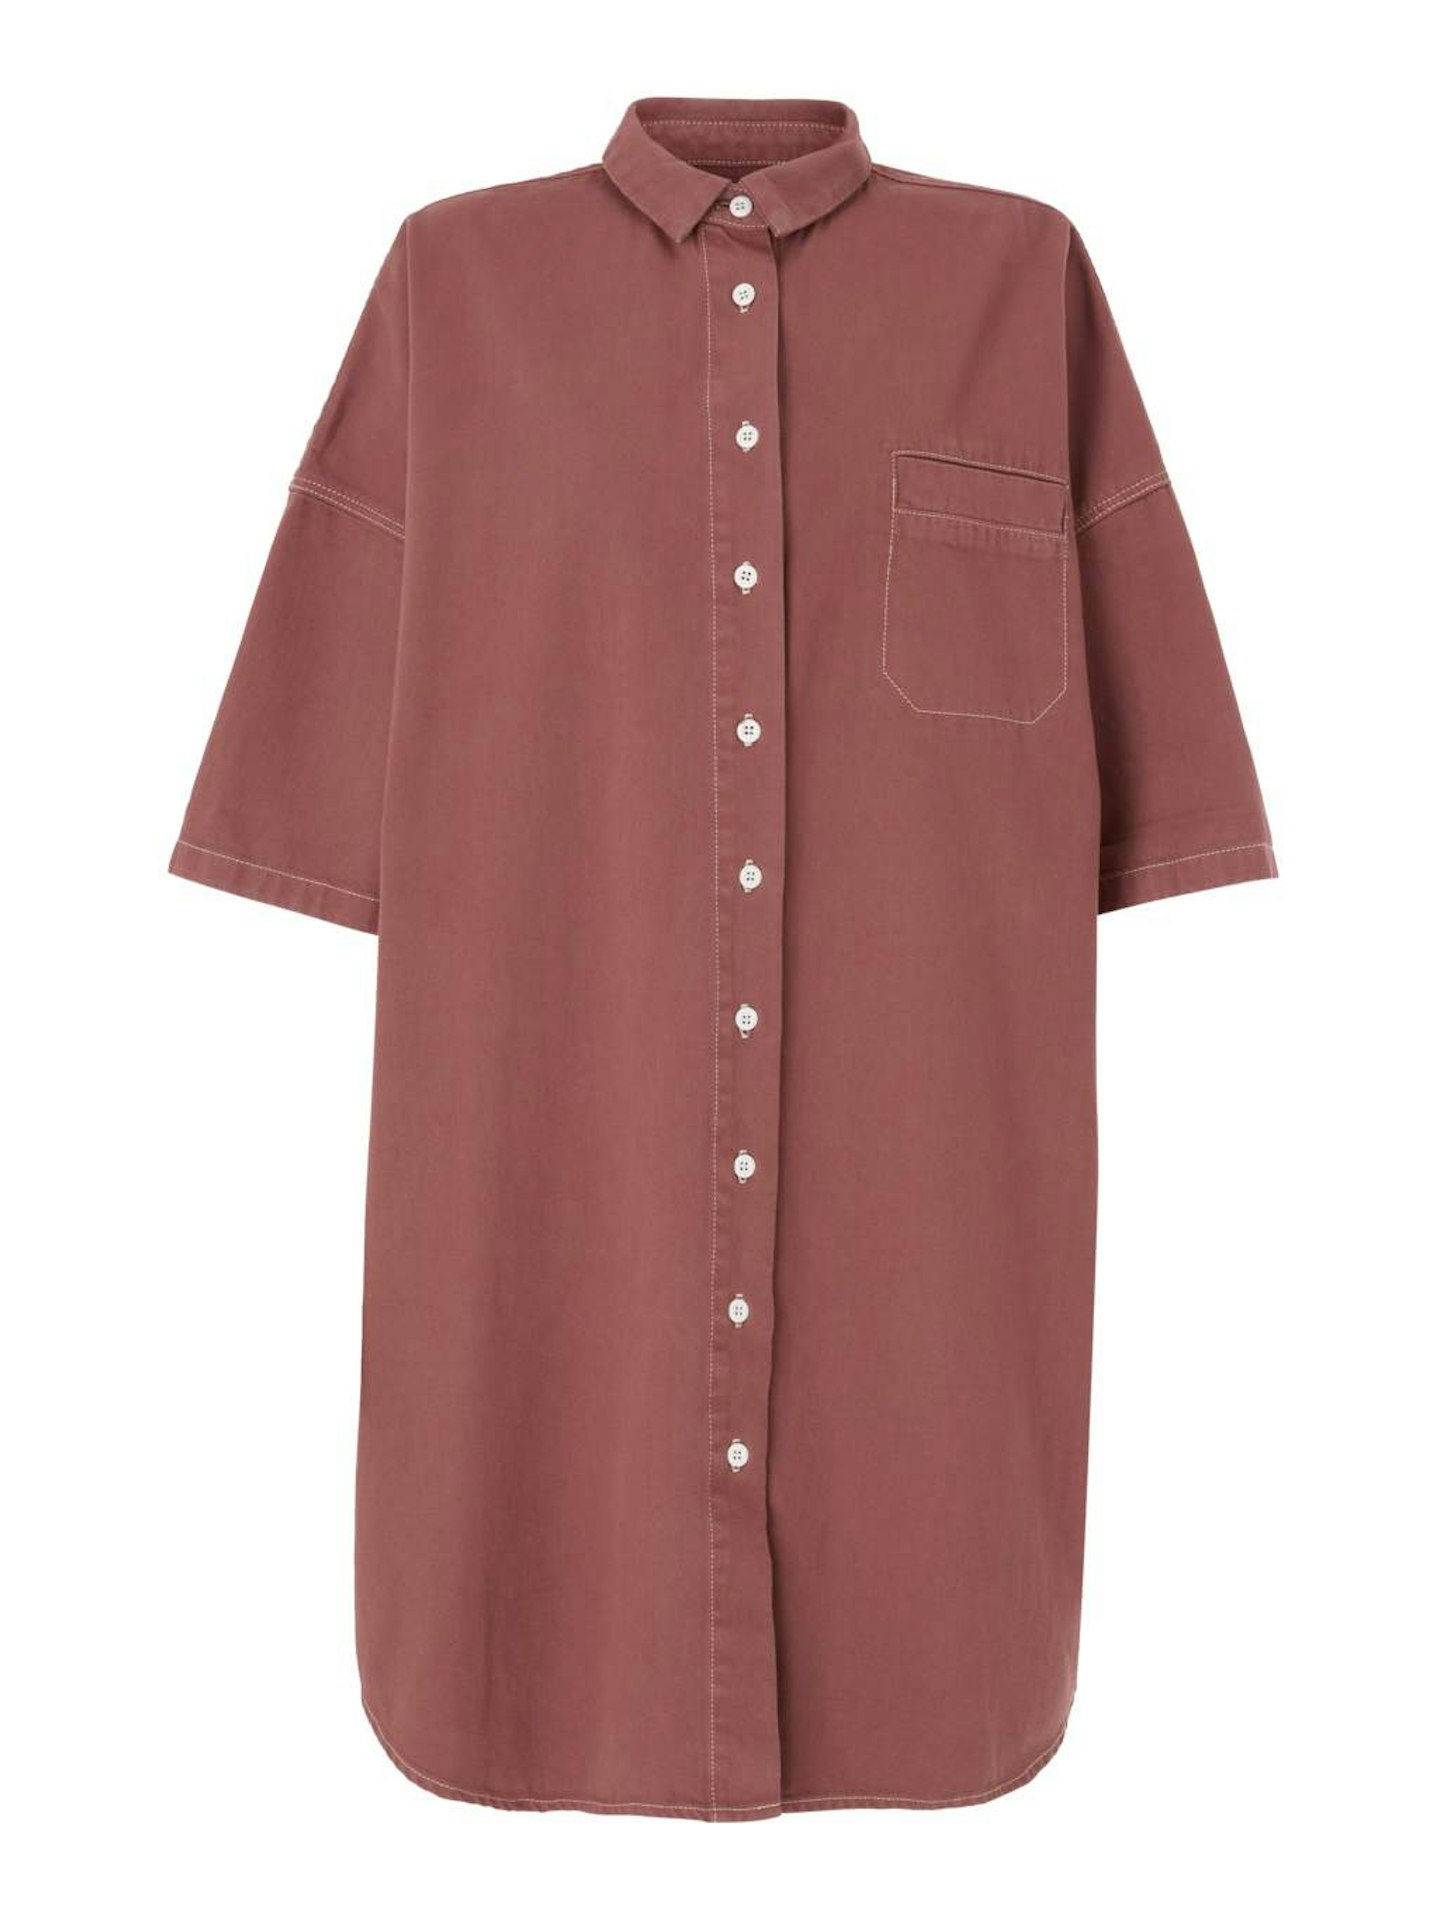 Kin by John Lewis & Partners, Oversized Denim Shirt Dress, £59